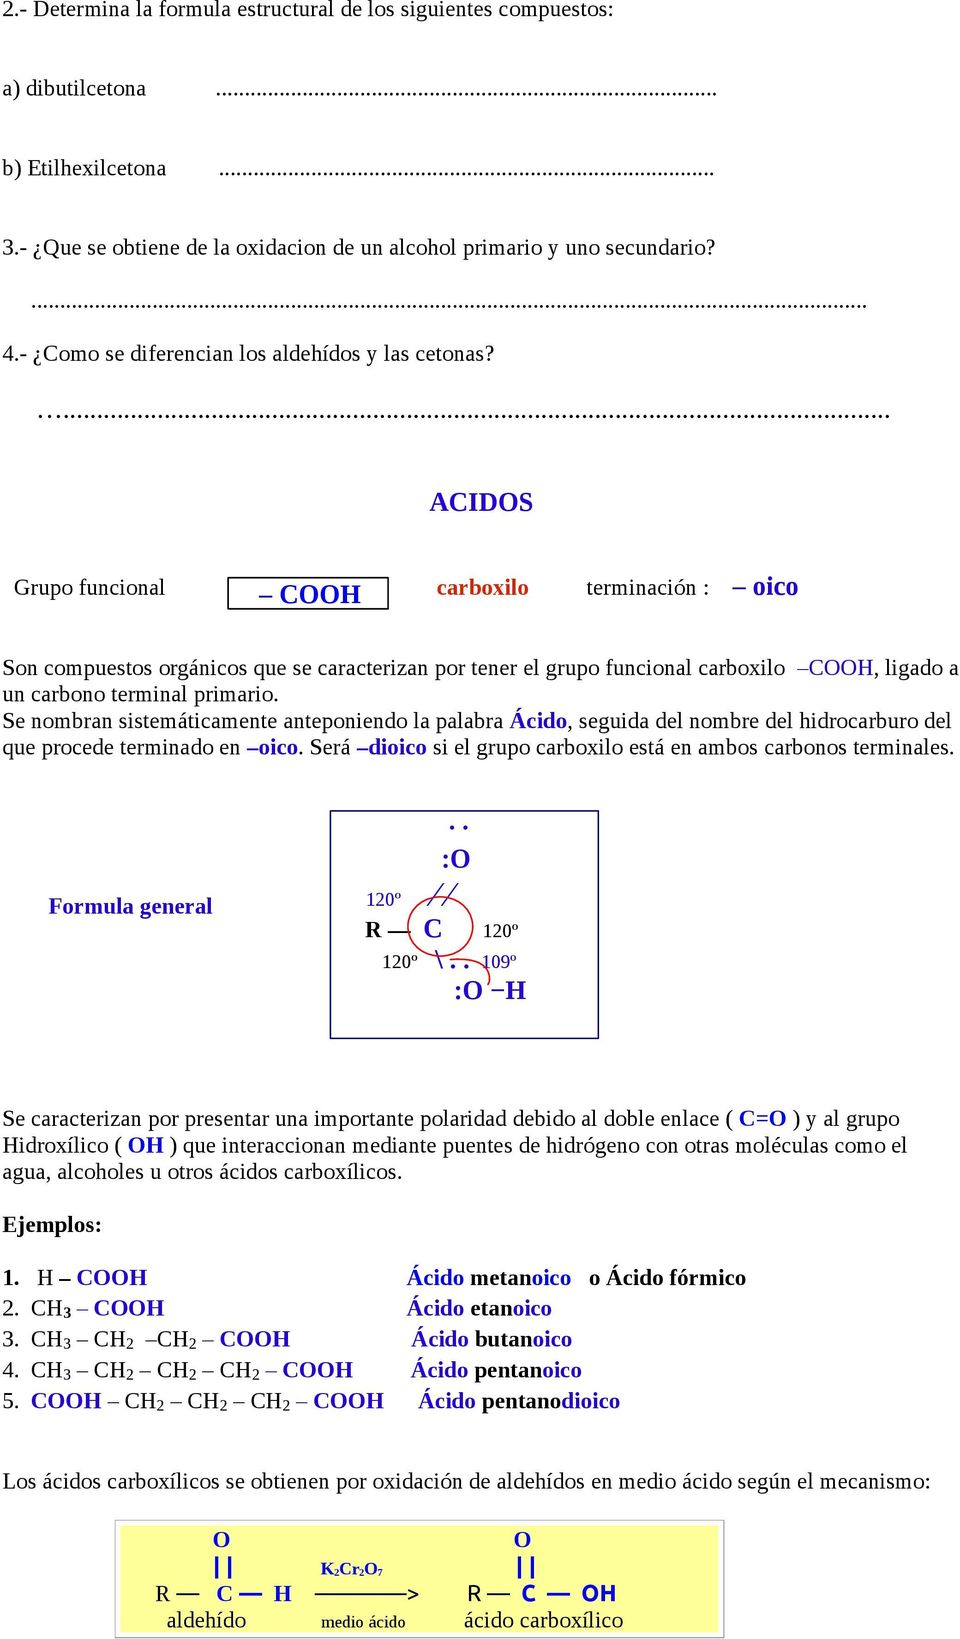 ... ACIDOS Grupo funcional CO carboxilo terminación : oico Son compuestos orgánicos que se caracterizan por tener el grupo funcional carboxilo CO, ligado a un carbono terminal primario.